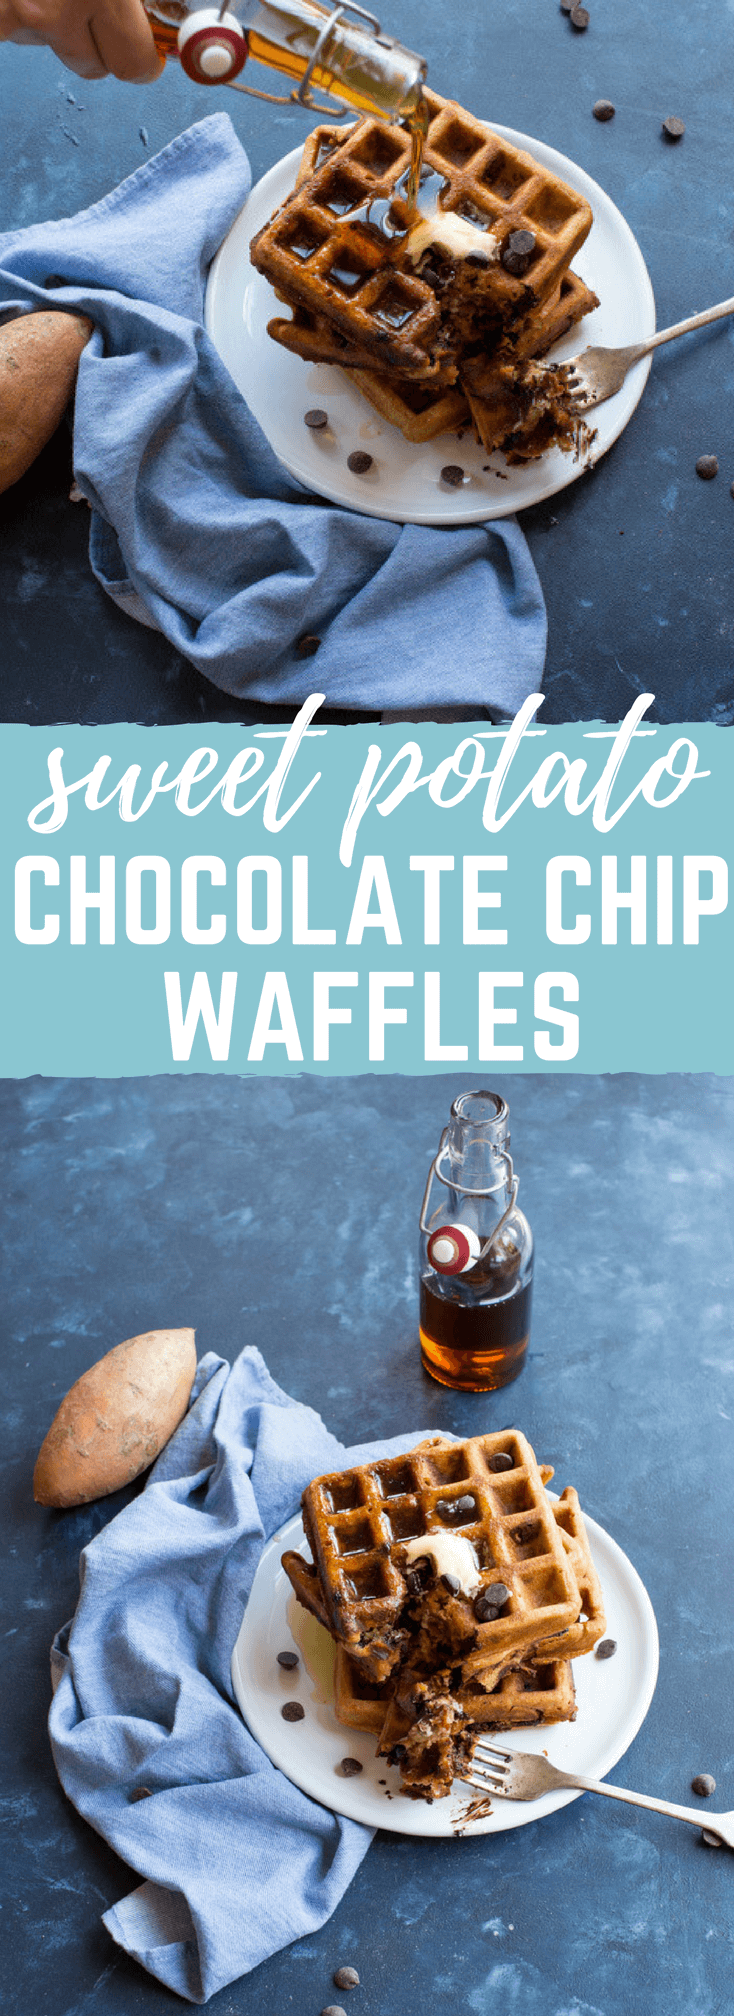 Sweet Potato Chocolate Chip Waffles. Gluten free and so YUM! Sweet potatoes and chocolate for breakfast? Yes please!